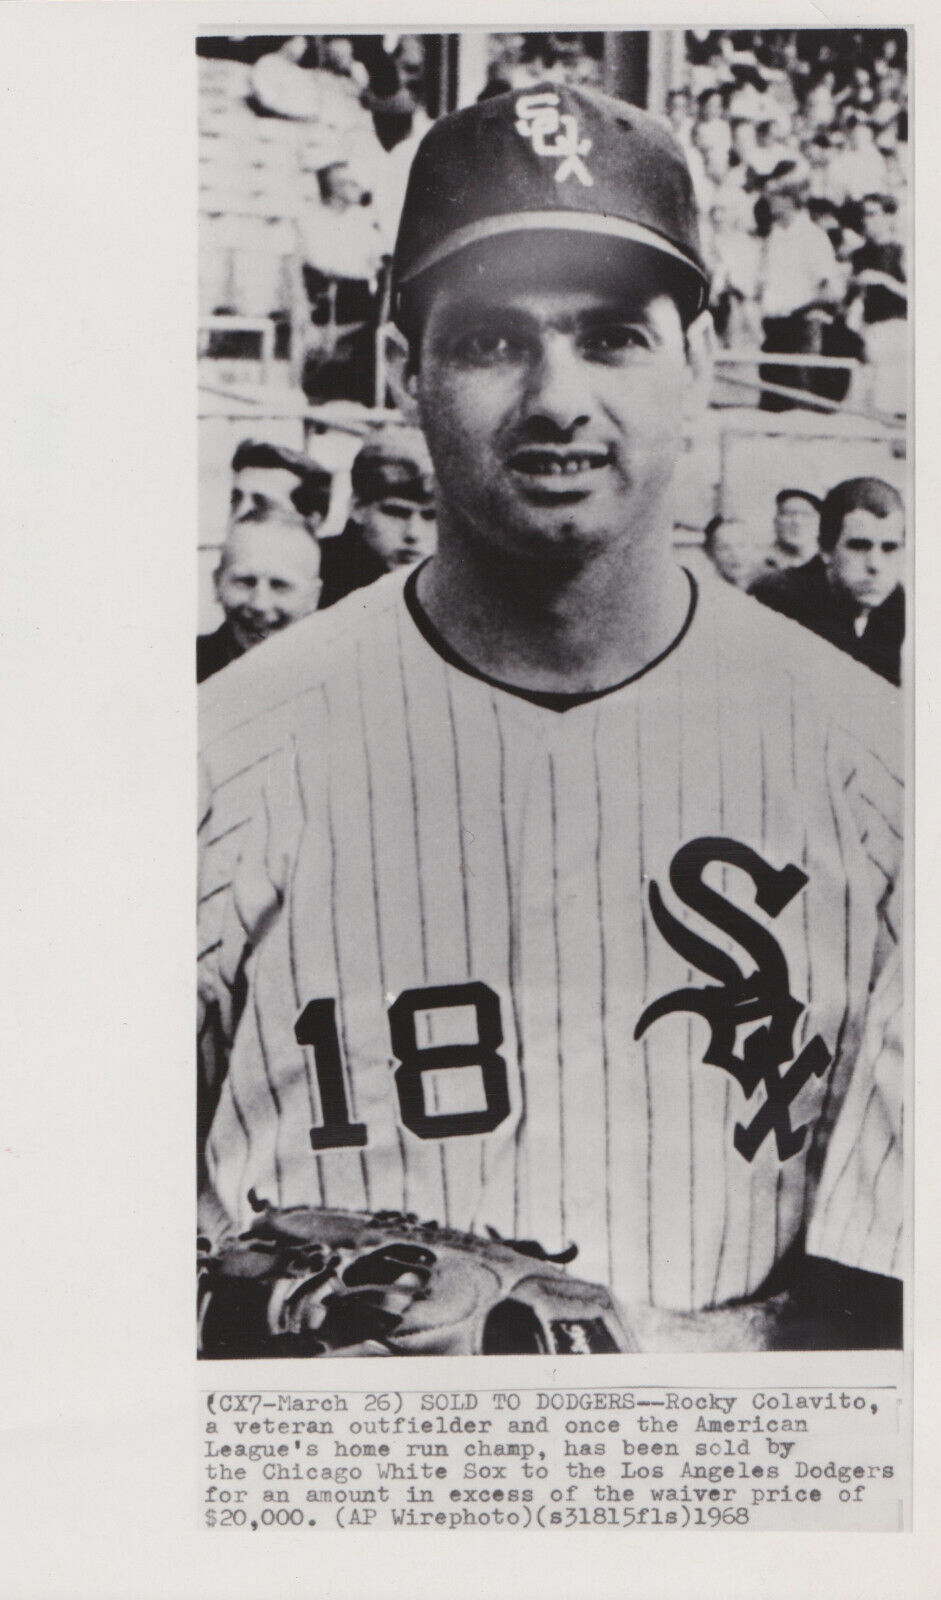 1968 Press Photo Chicago White Sox Baseball Player Rocky Colavito